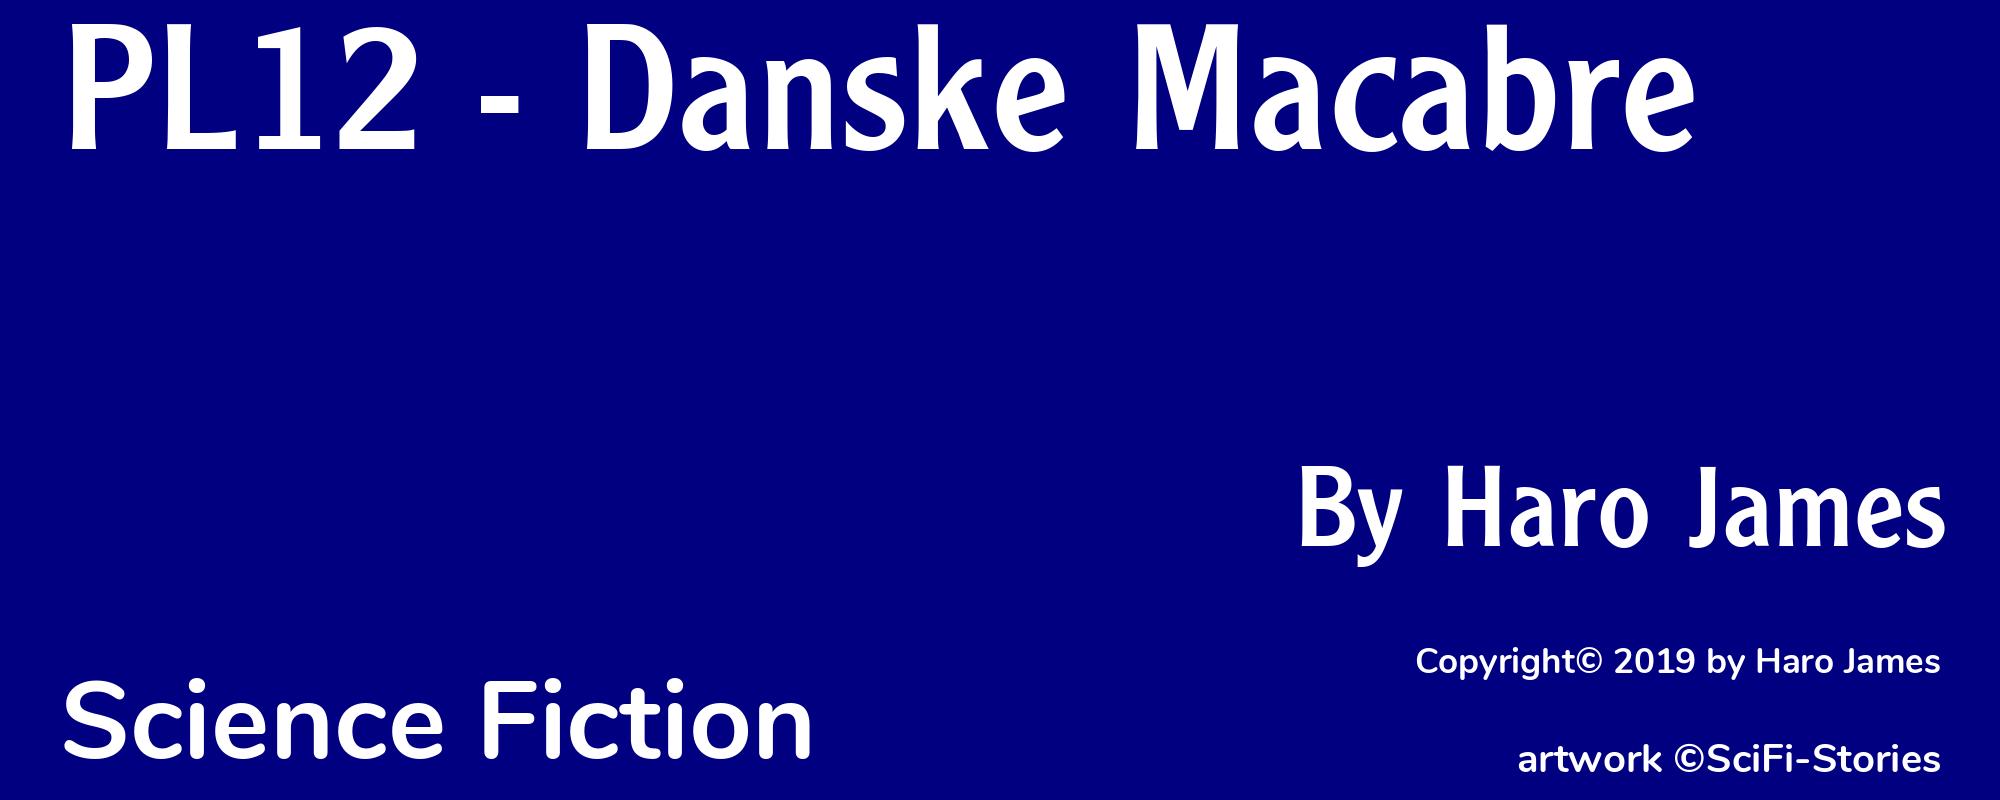 PL12 - Danske Macabre - Cover